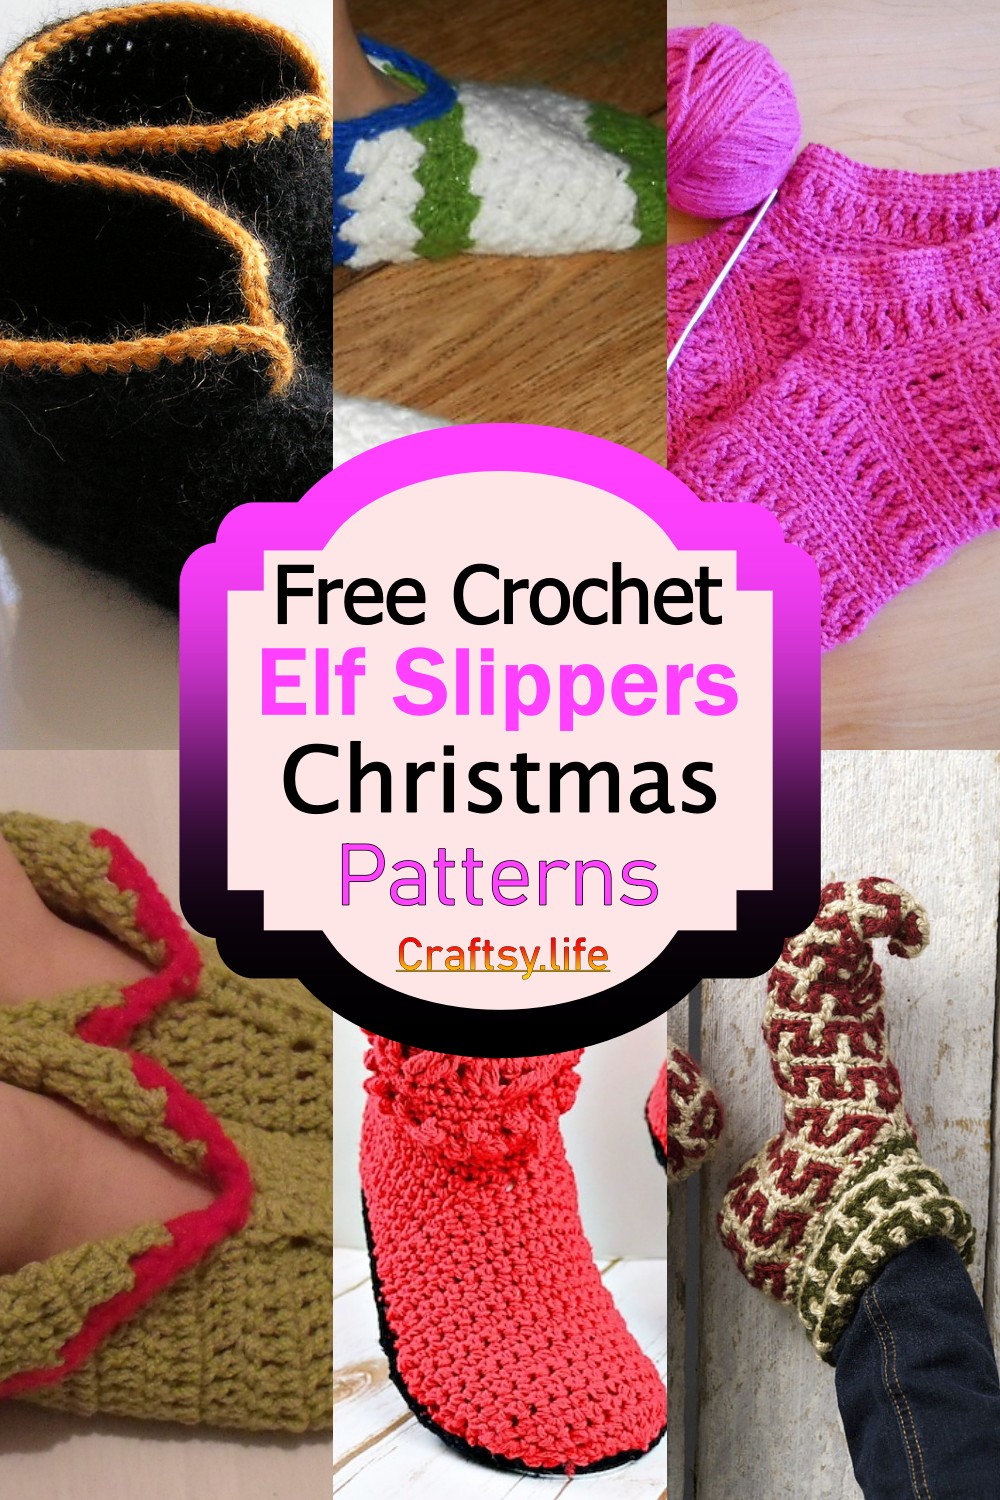 Crochet Elf Slippers Christmas Patterns